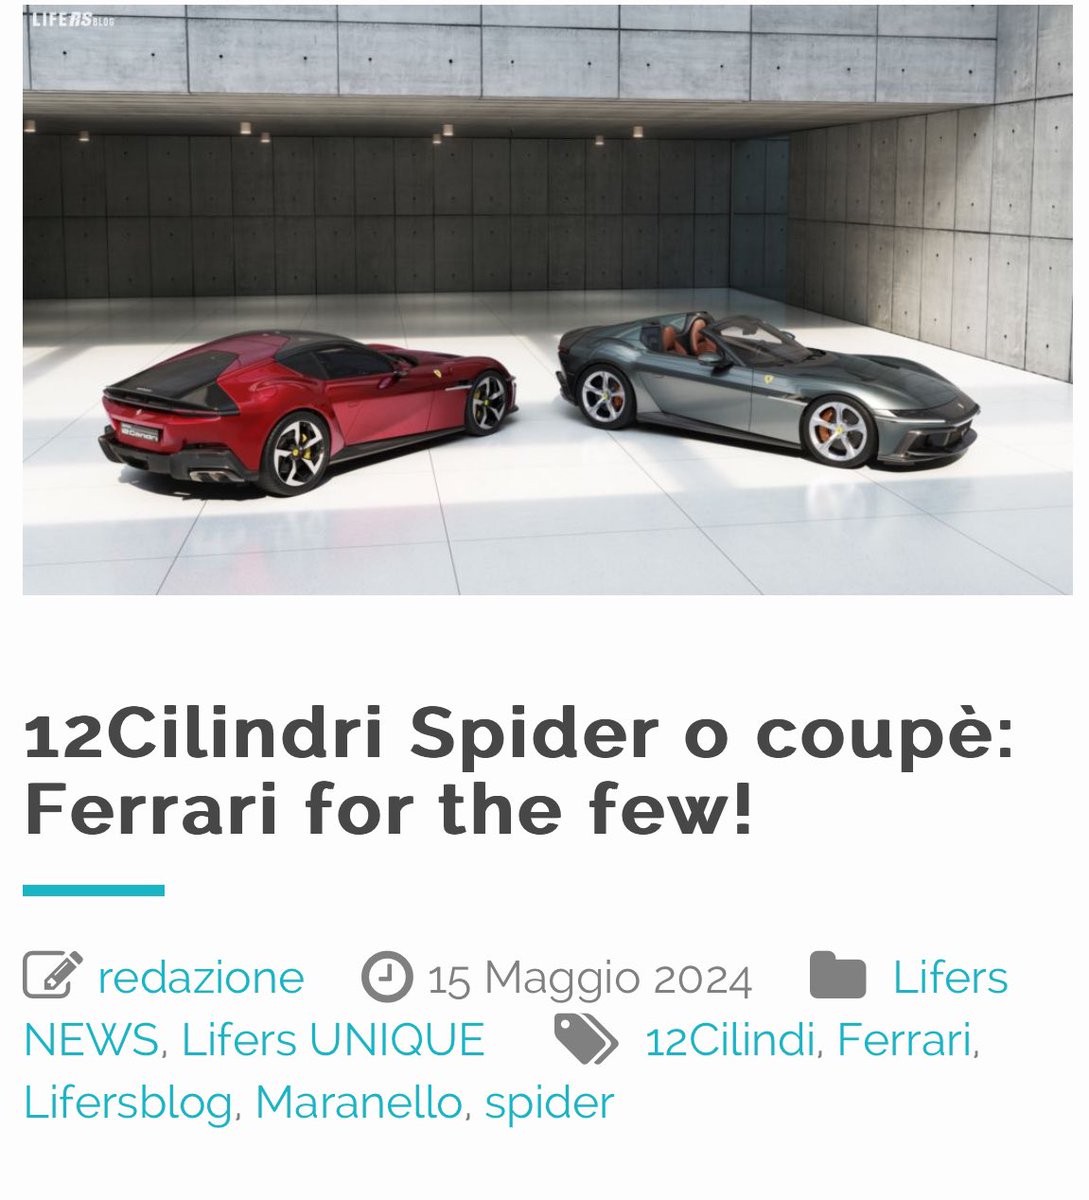 lifersblog.com/novita-auto/12… @Ferrari #ferrari #dodicicilindri #spider #coupe #supercar #news #blog #blogger #lifersblog